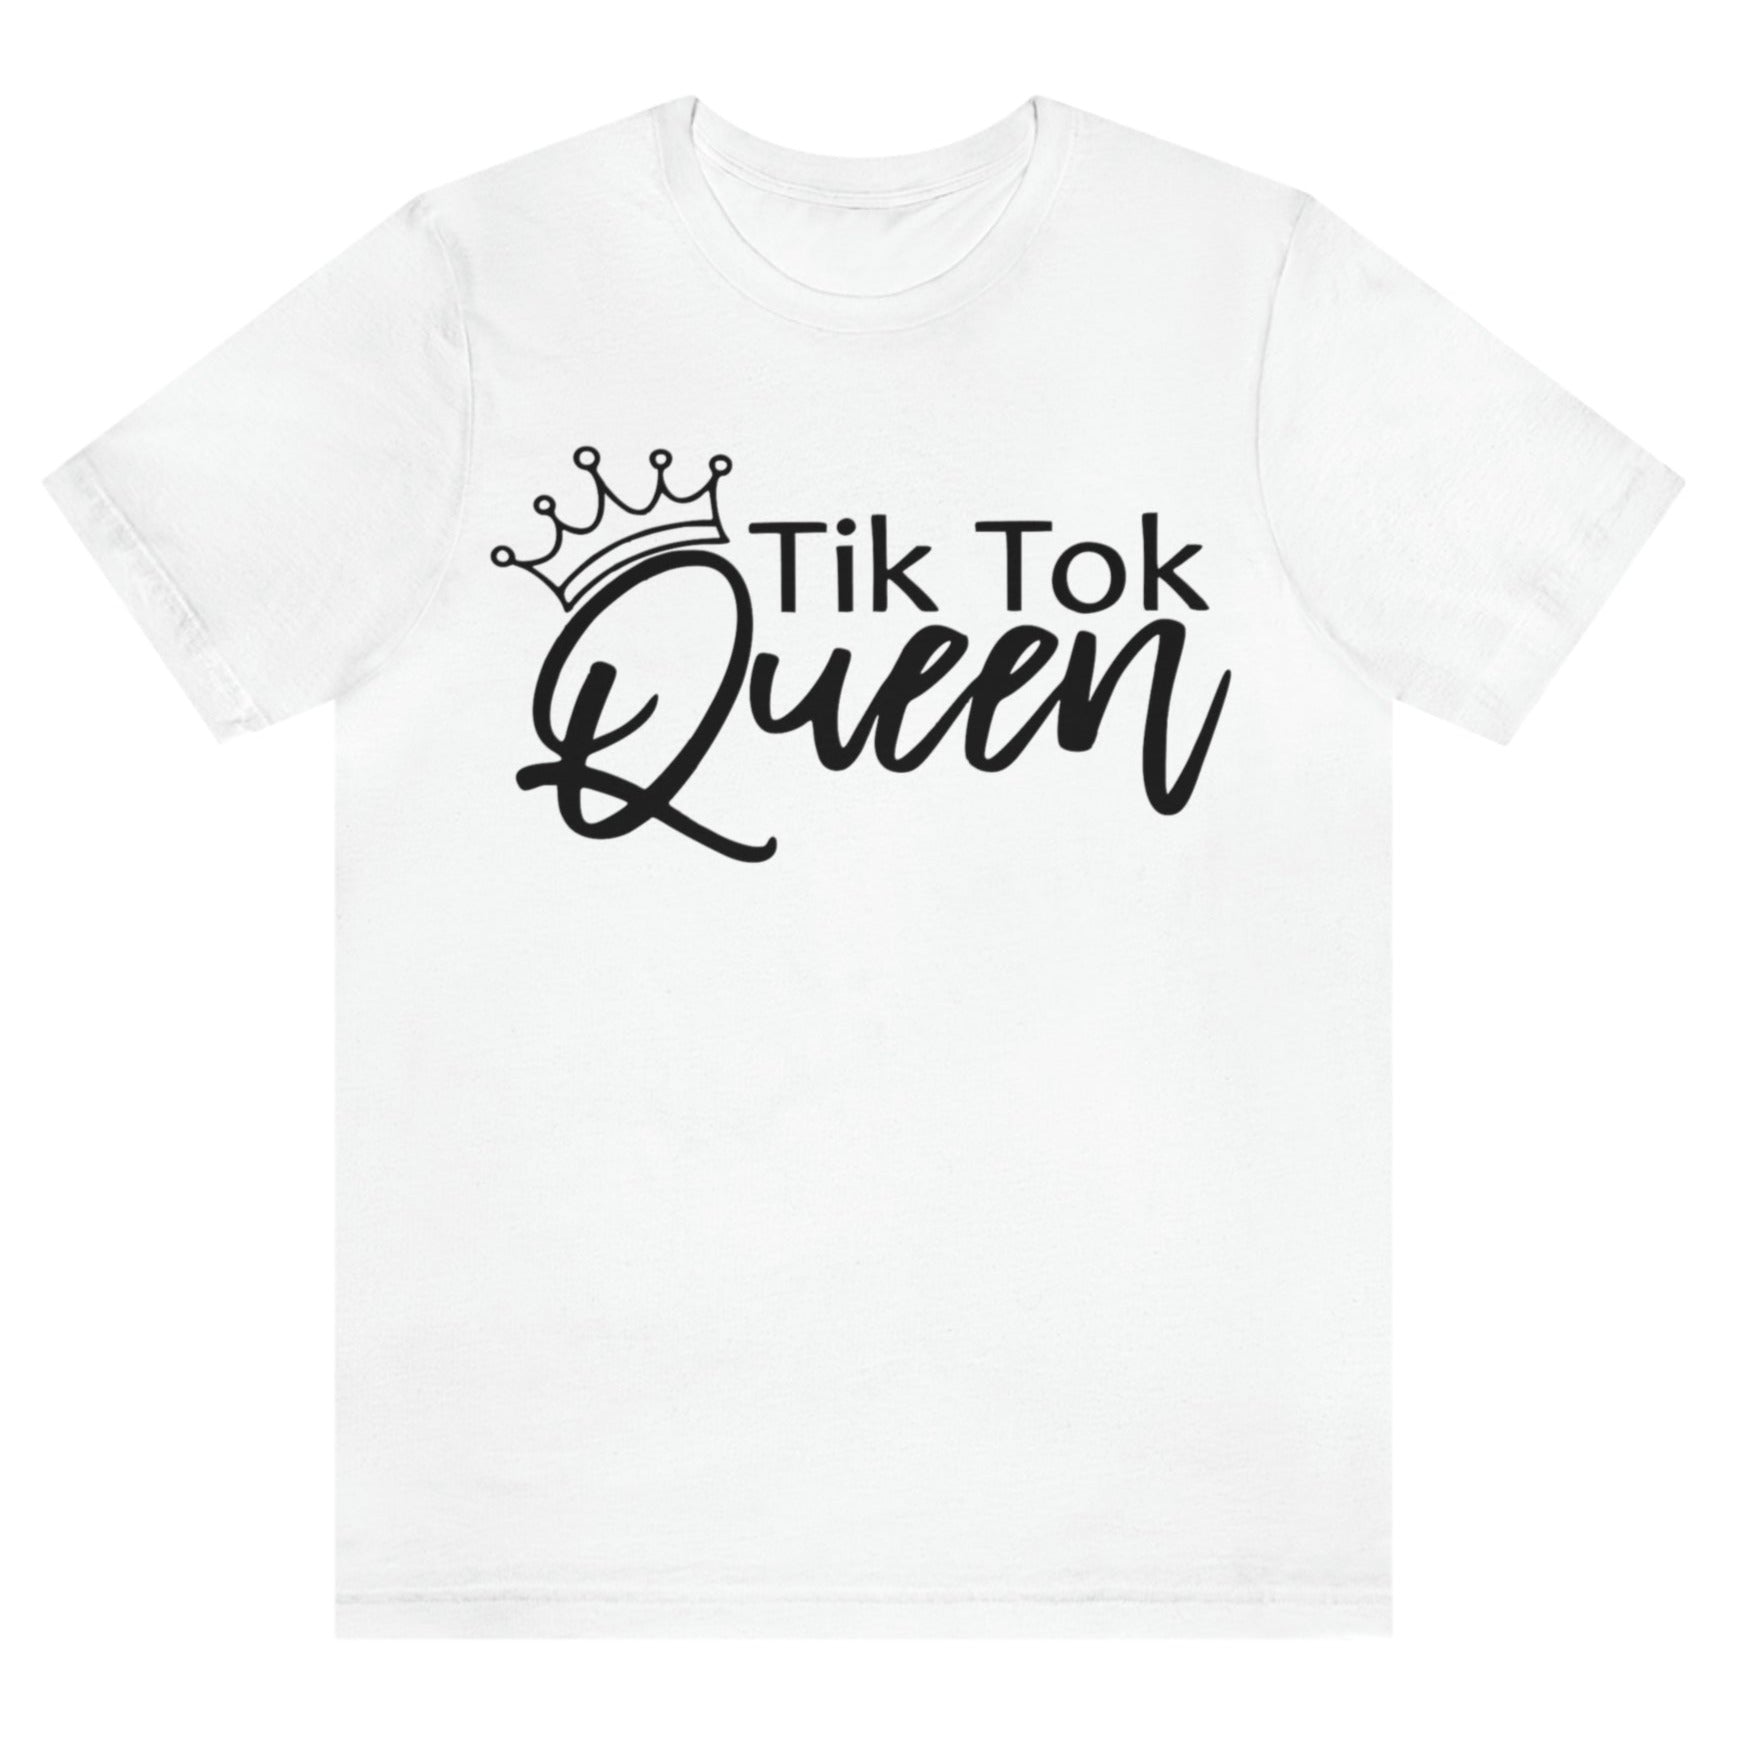 tik-tok-queen-white-t-shirt-womens